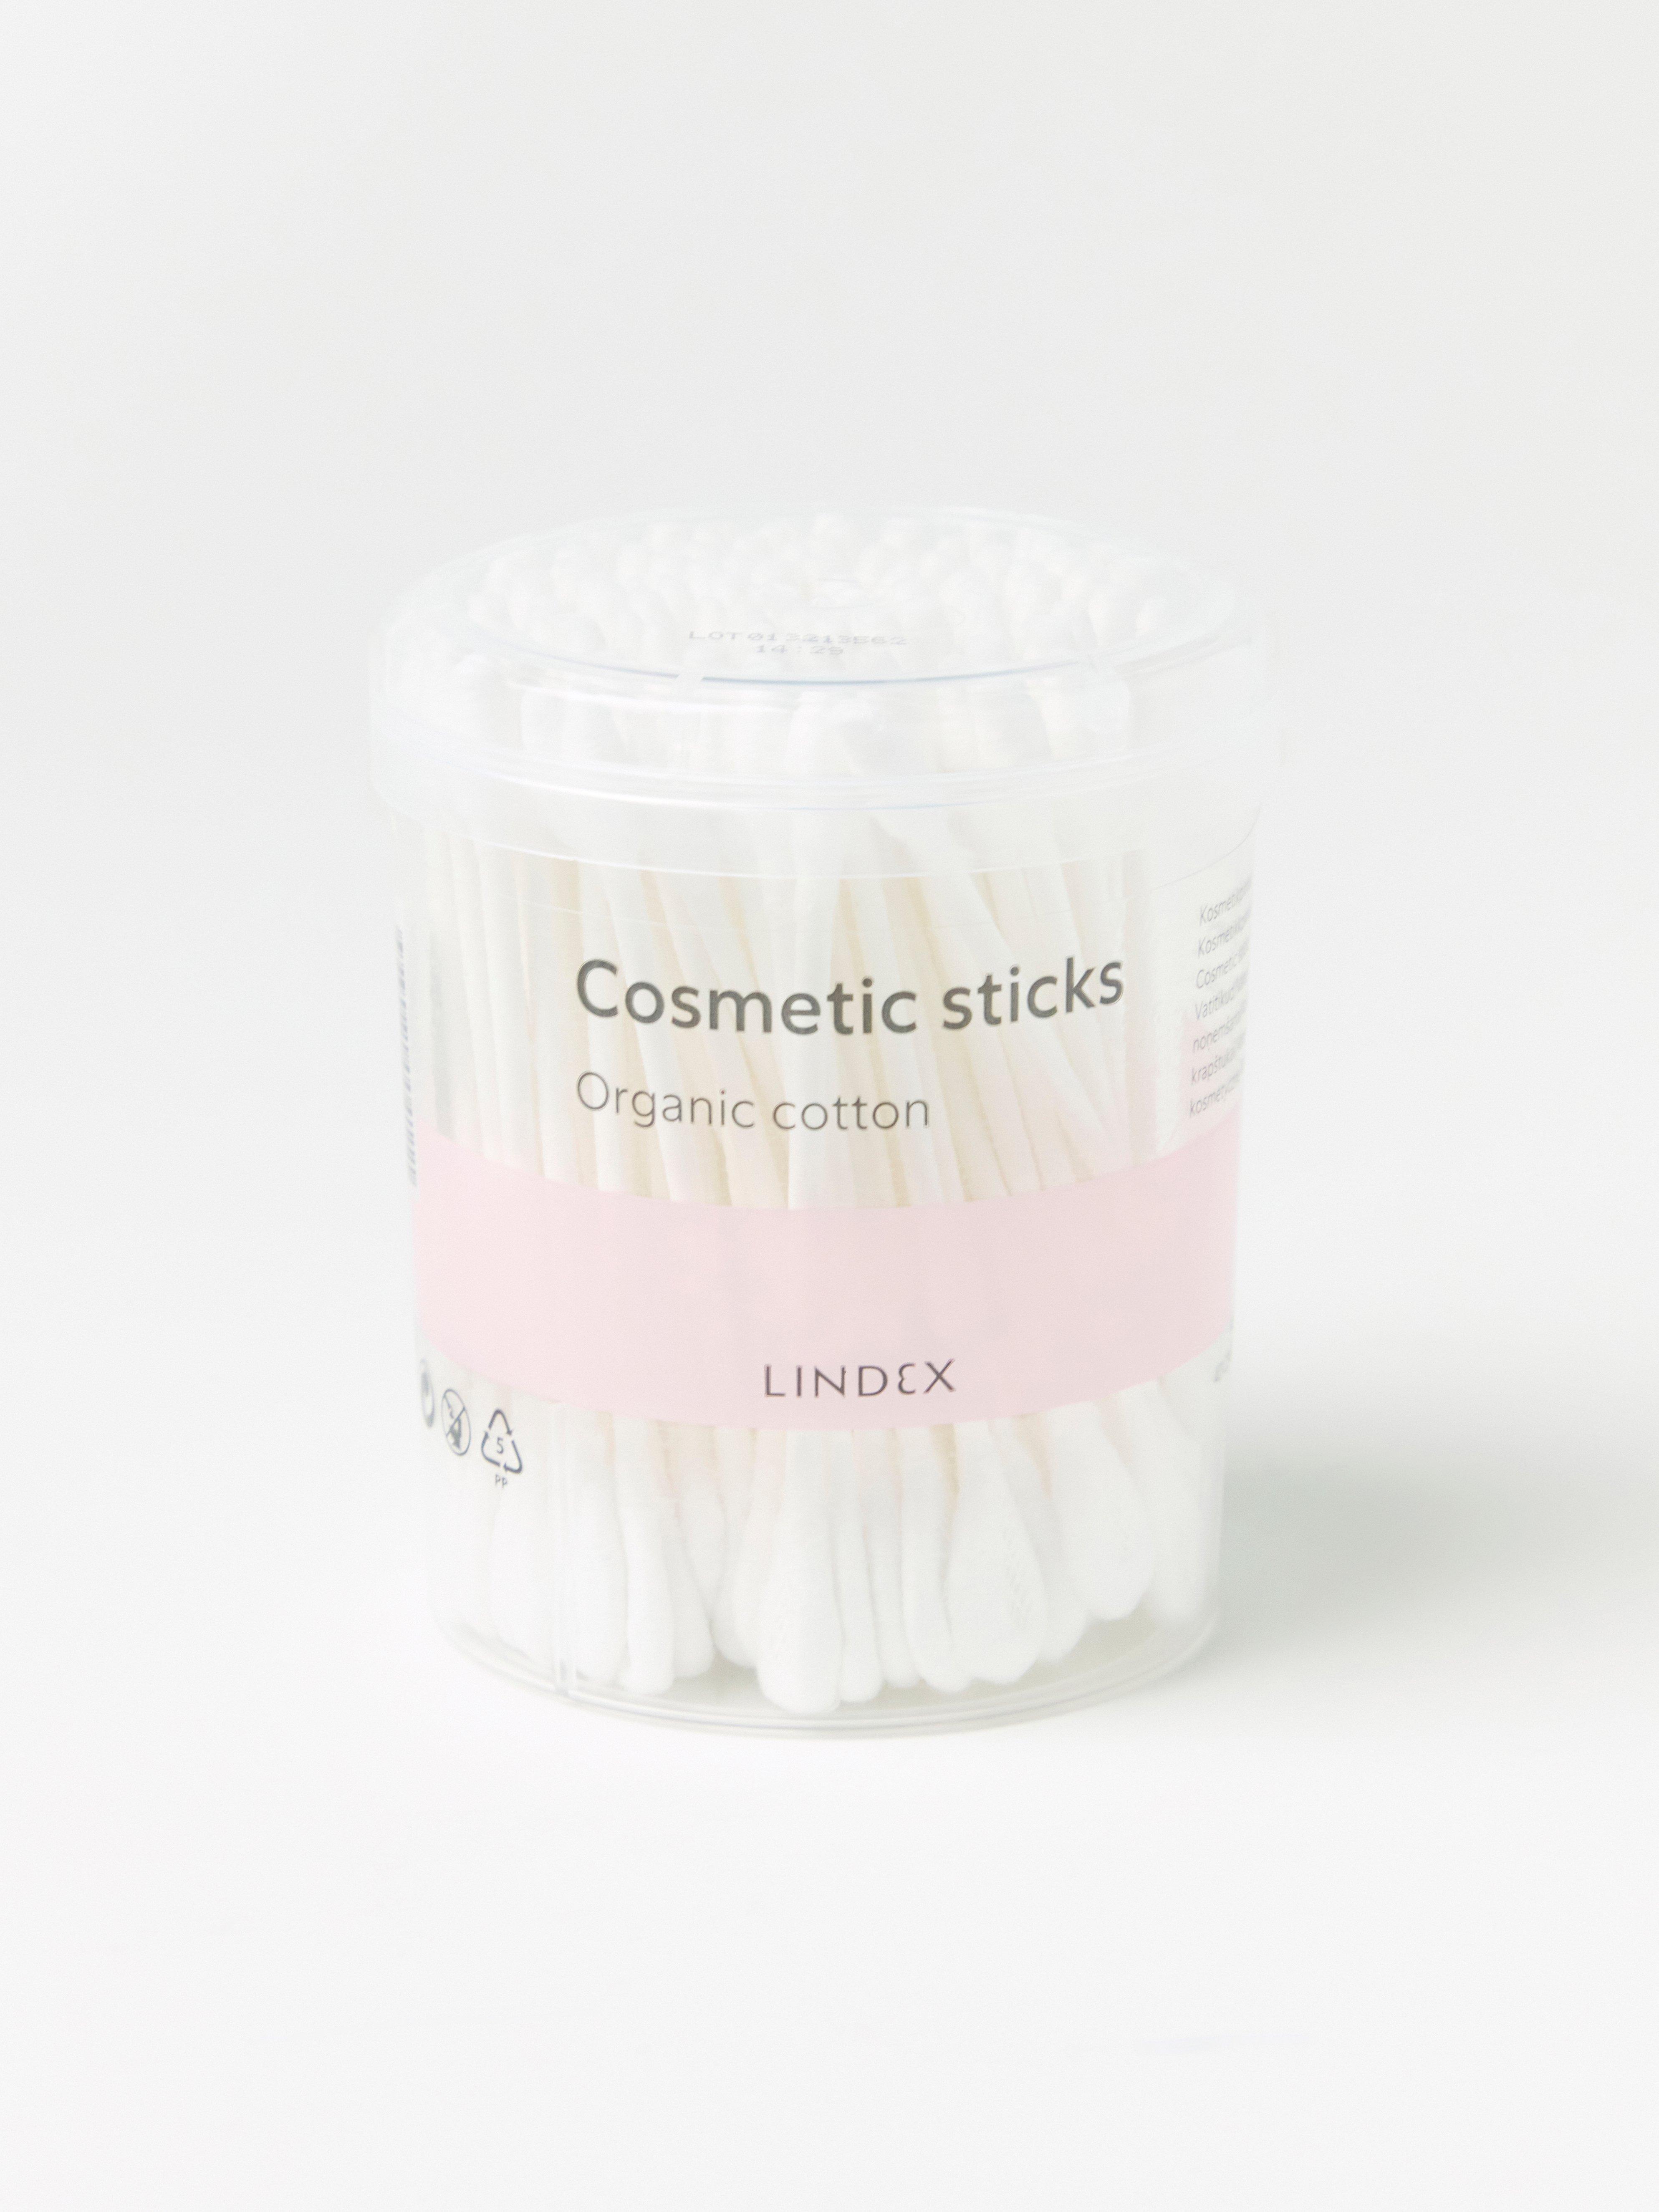 Cosmetic sticks